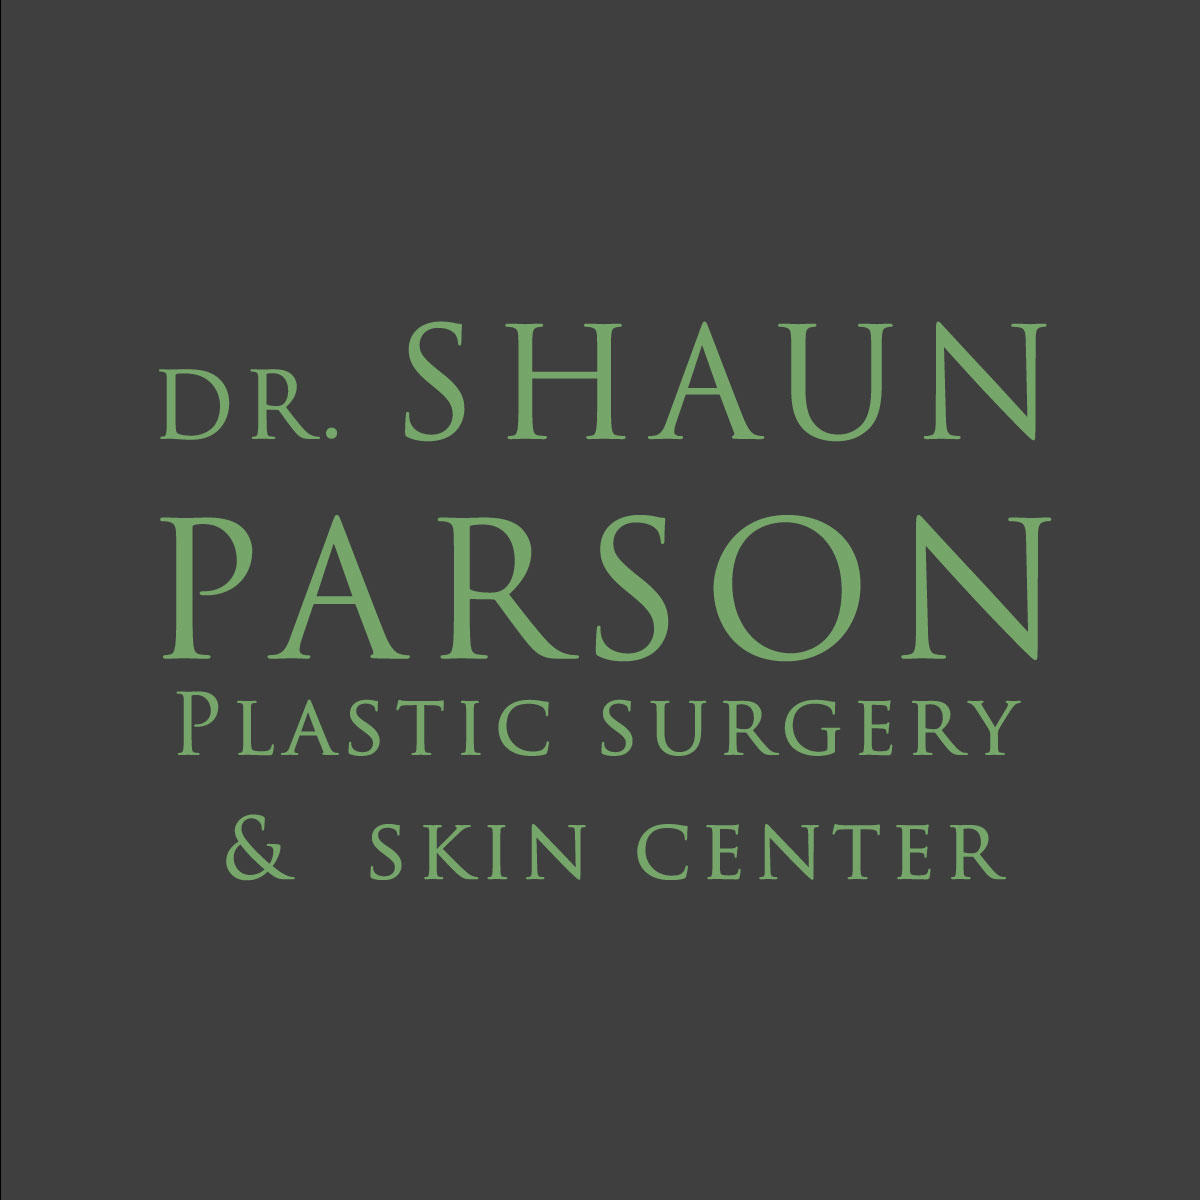 Dr. Shaun Parson Plastic Surgery and Skin Center Logo